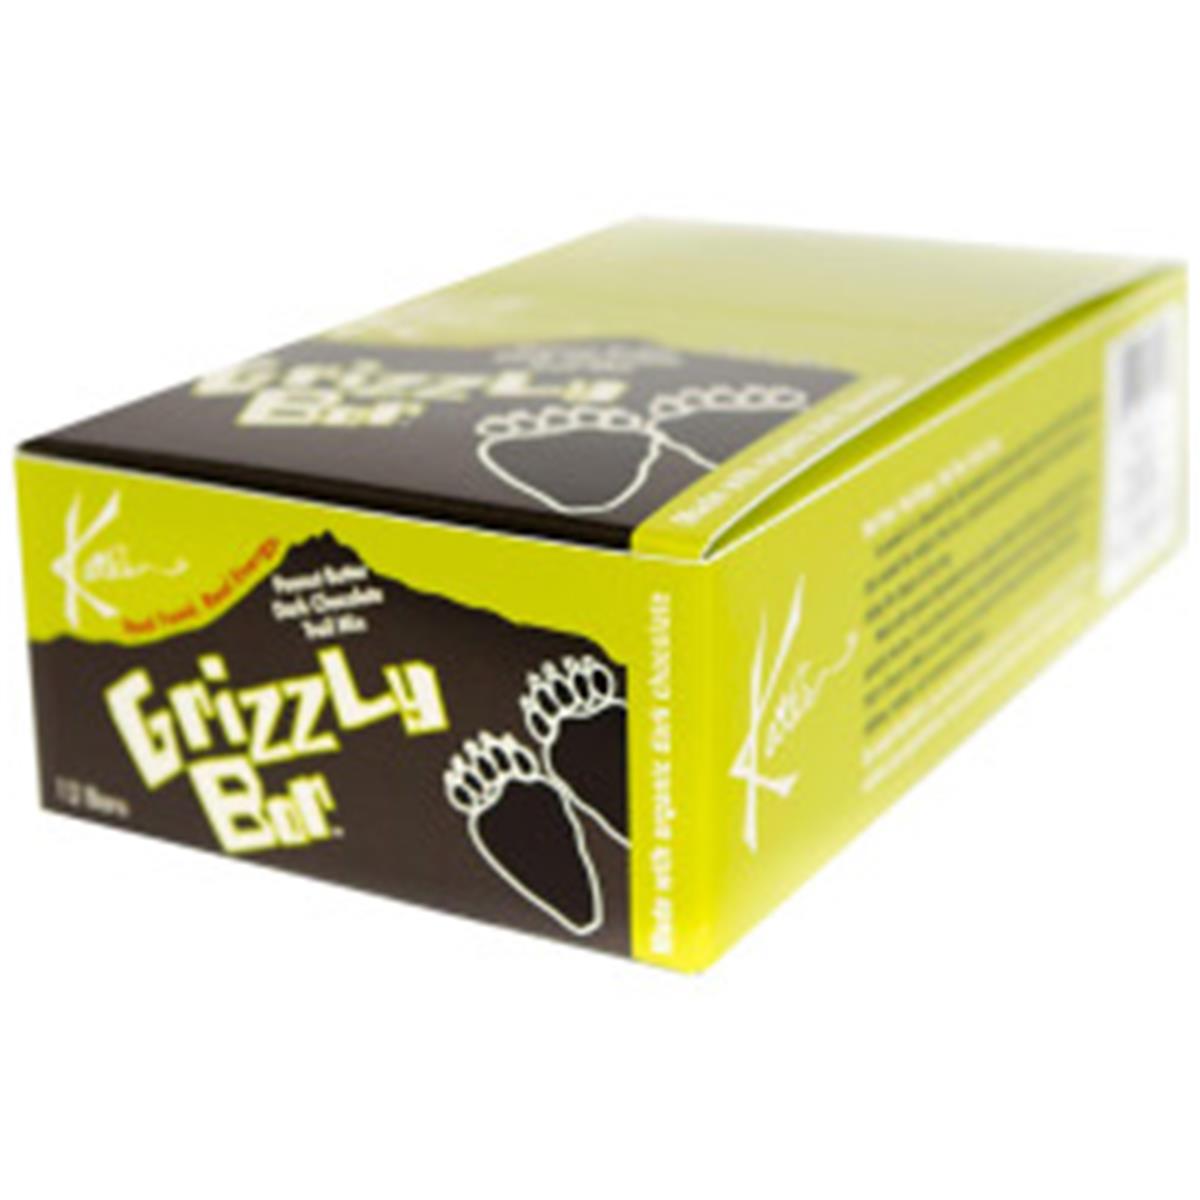 Bwa52988 12 X 3 Oz Real Food Grizzly Bars